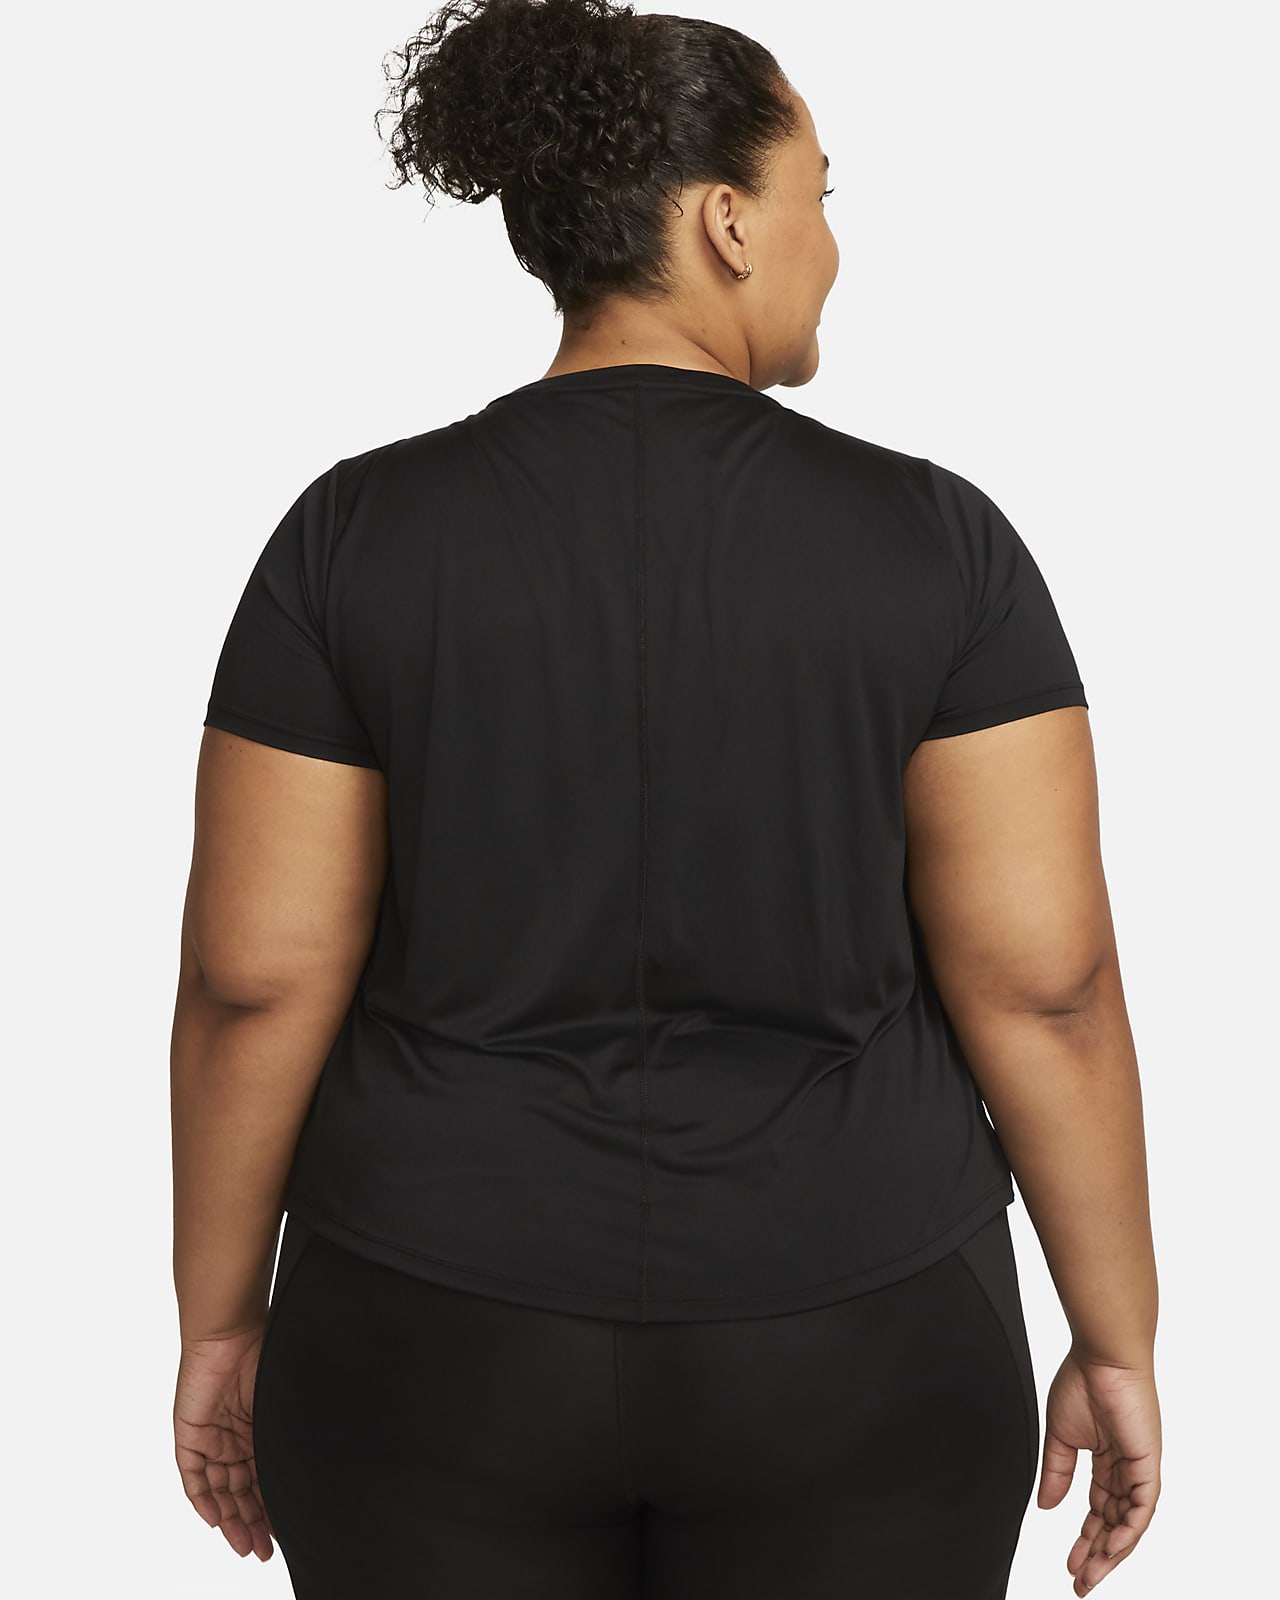 Nike Women's Size XS Black Dri-Fit Athletic / Running / Gym Capri